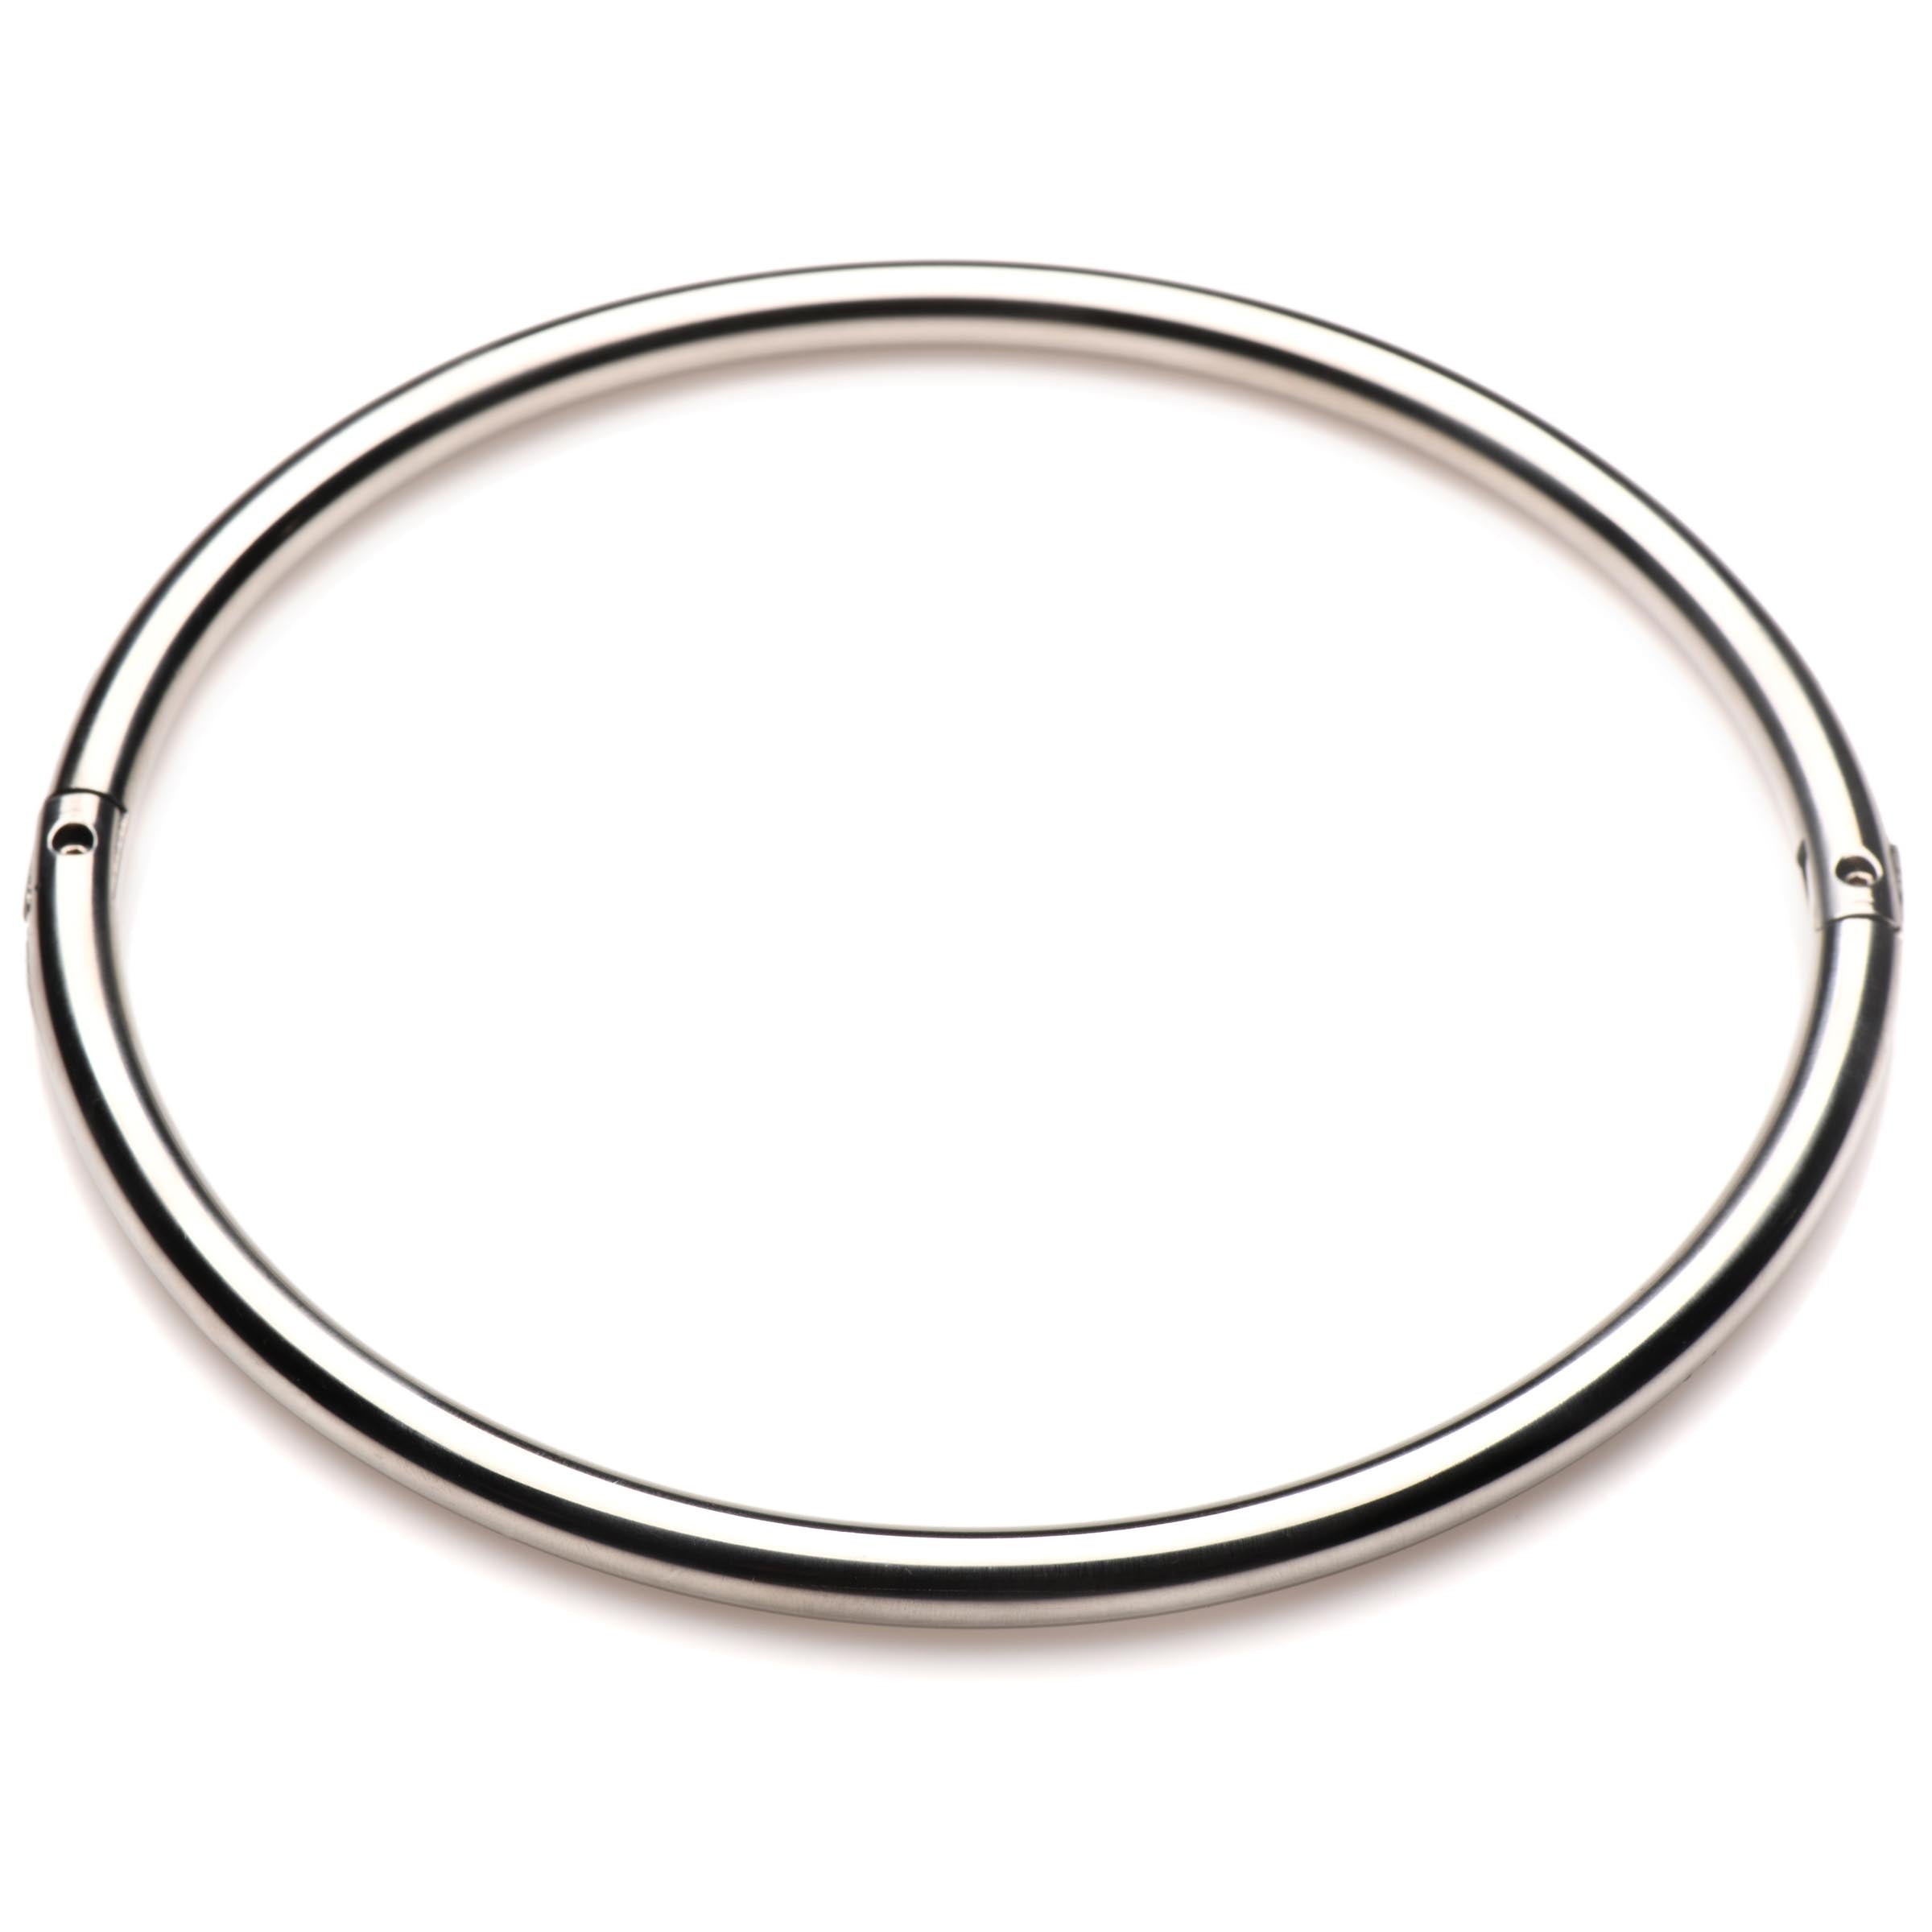 Stainless Steel Locking Collar - Medium